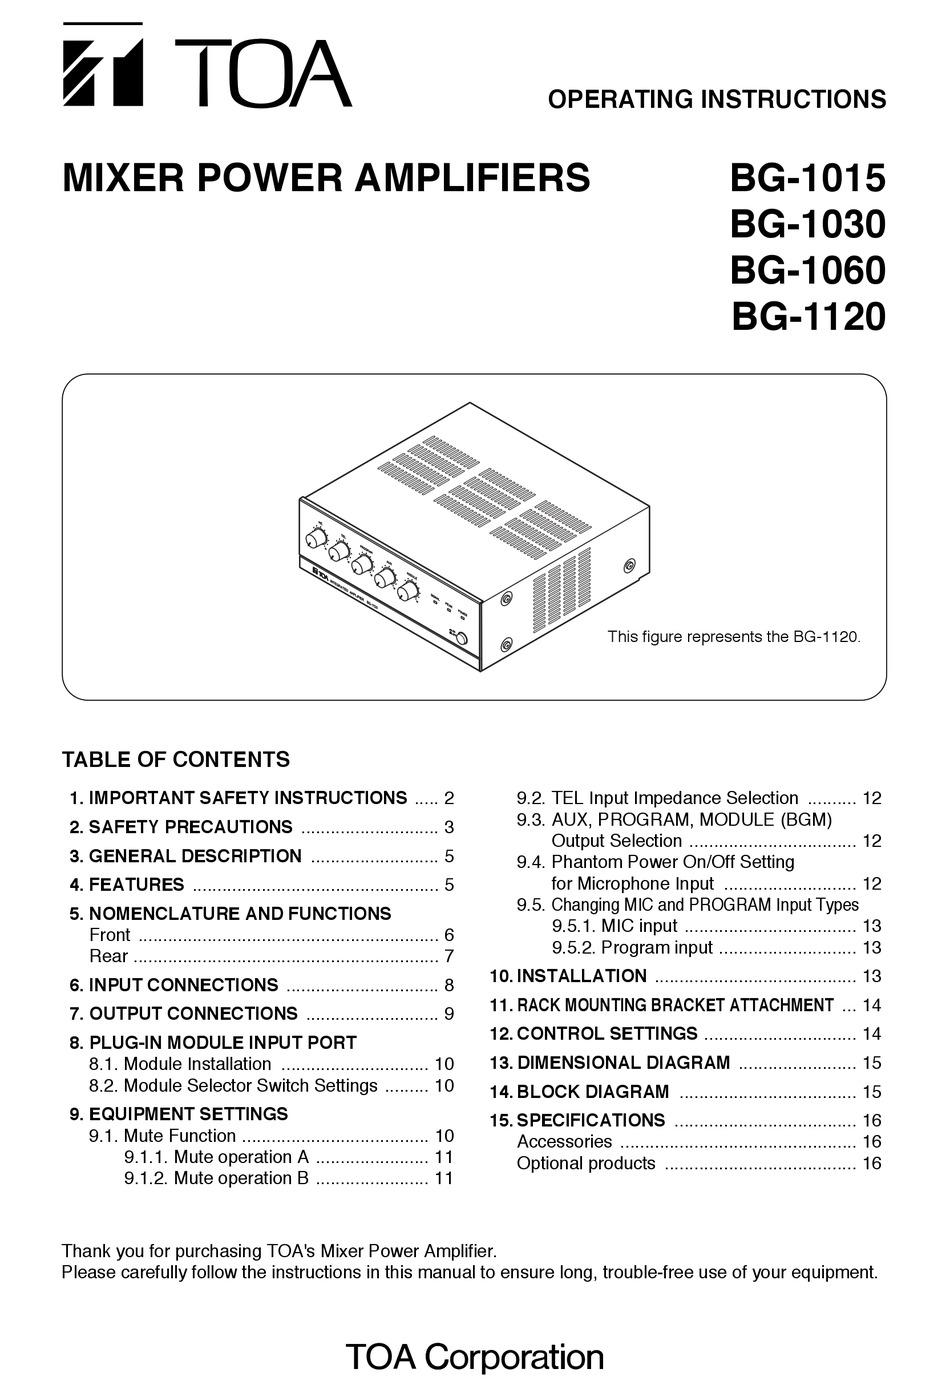 TOA BG-1015 OPERATING INSTRUCTIONS MANUAL Pdf Download | ManualsLib